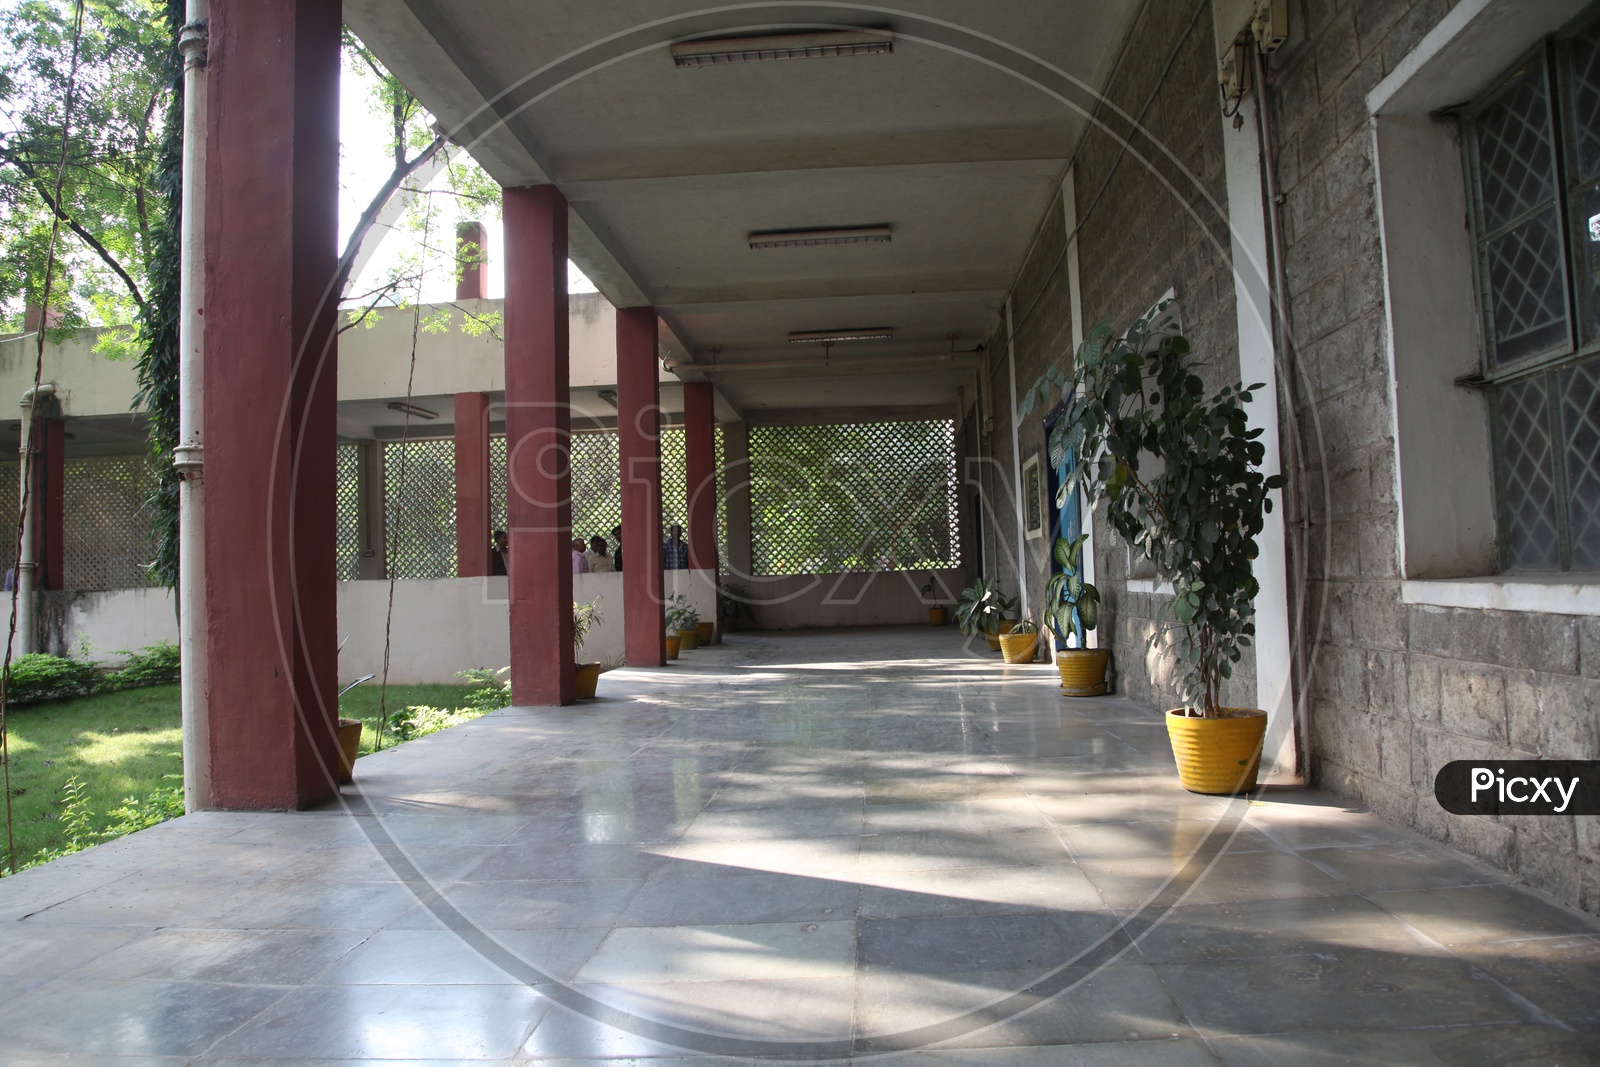 Corridor of a School/College